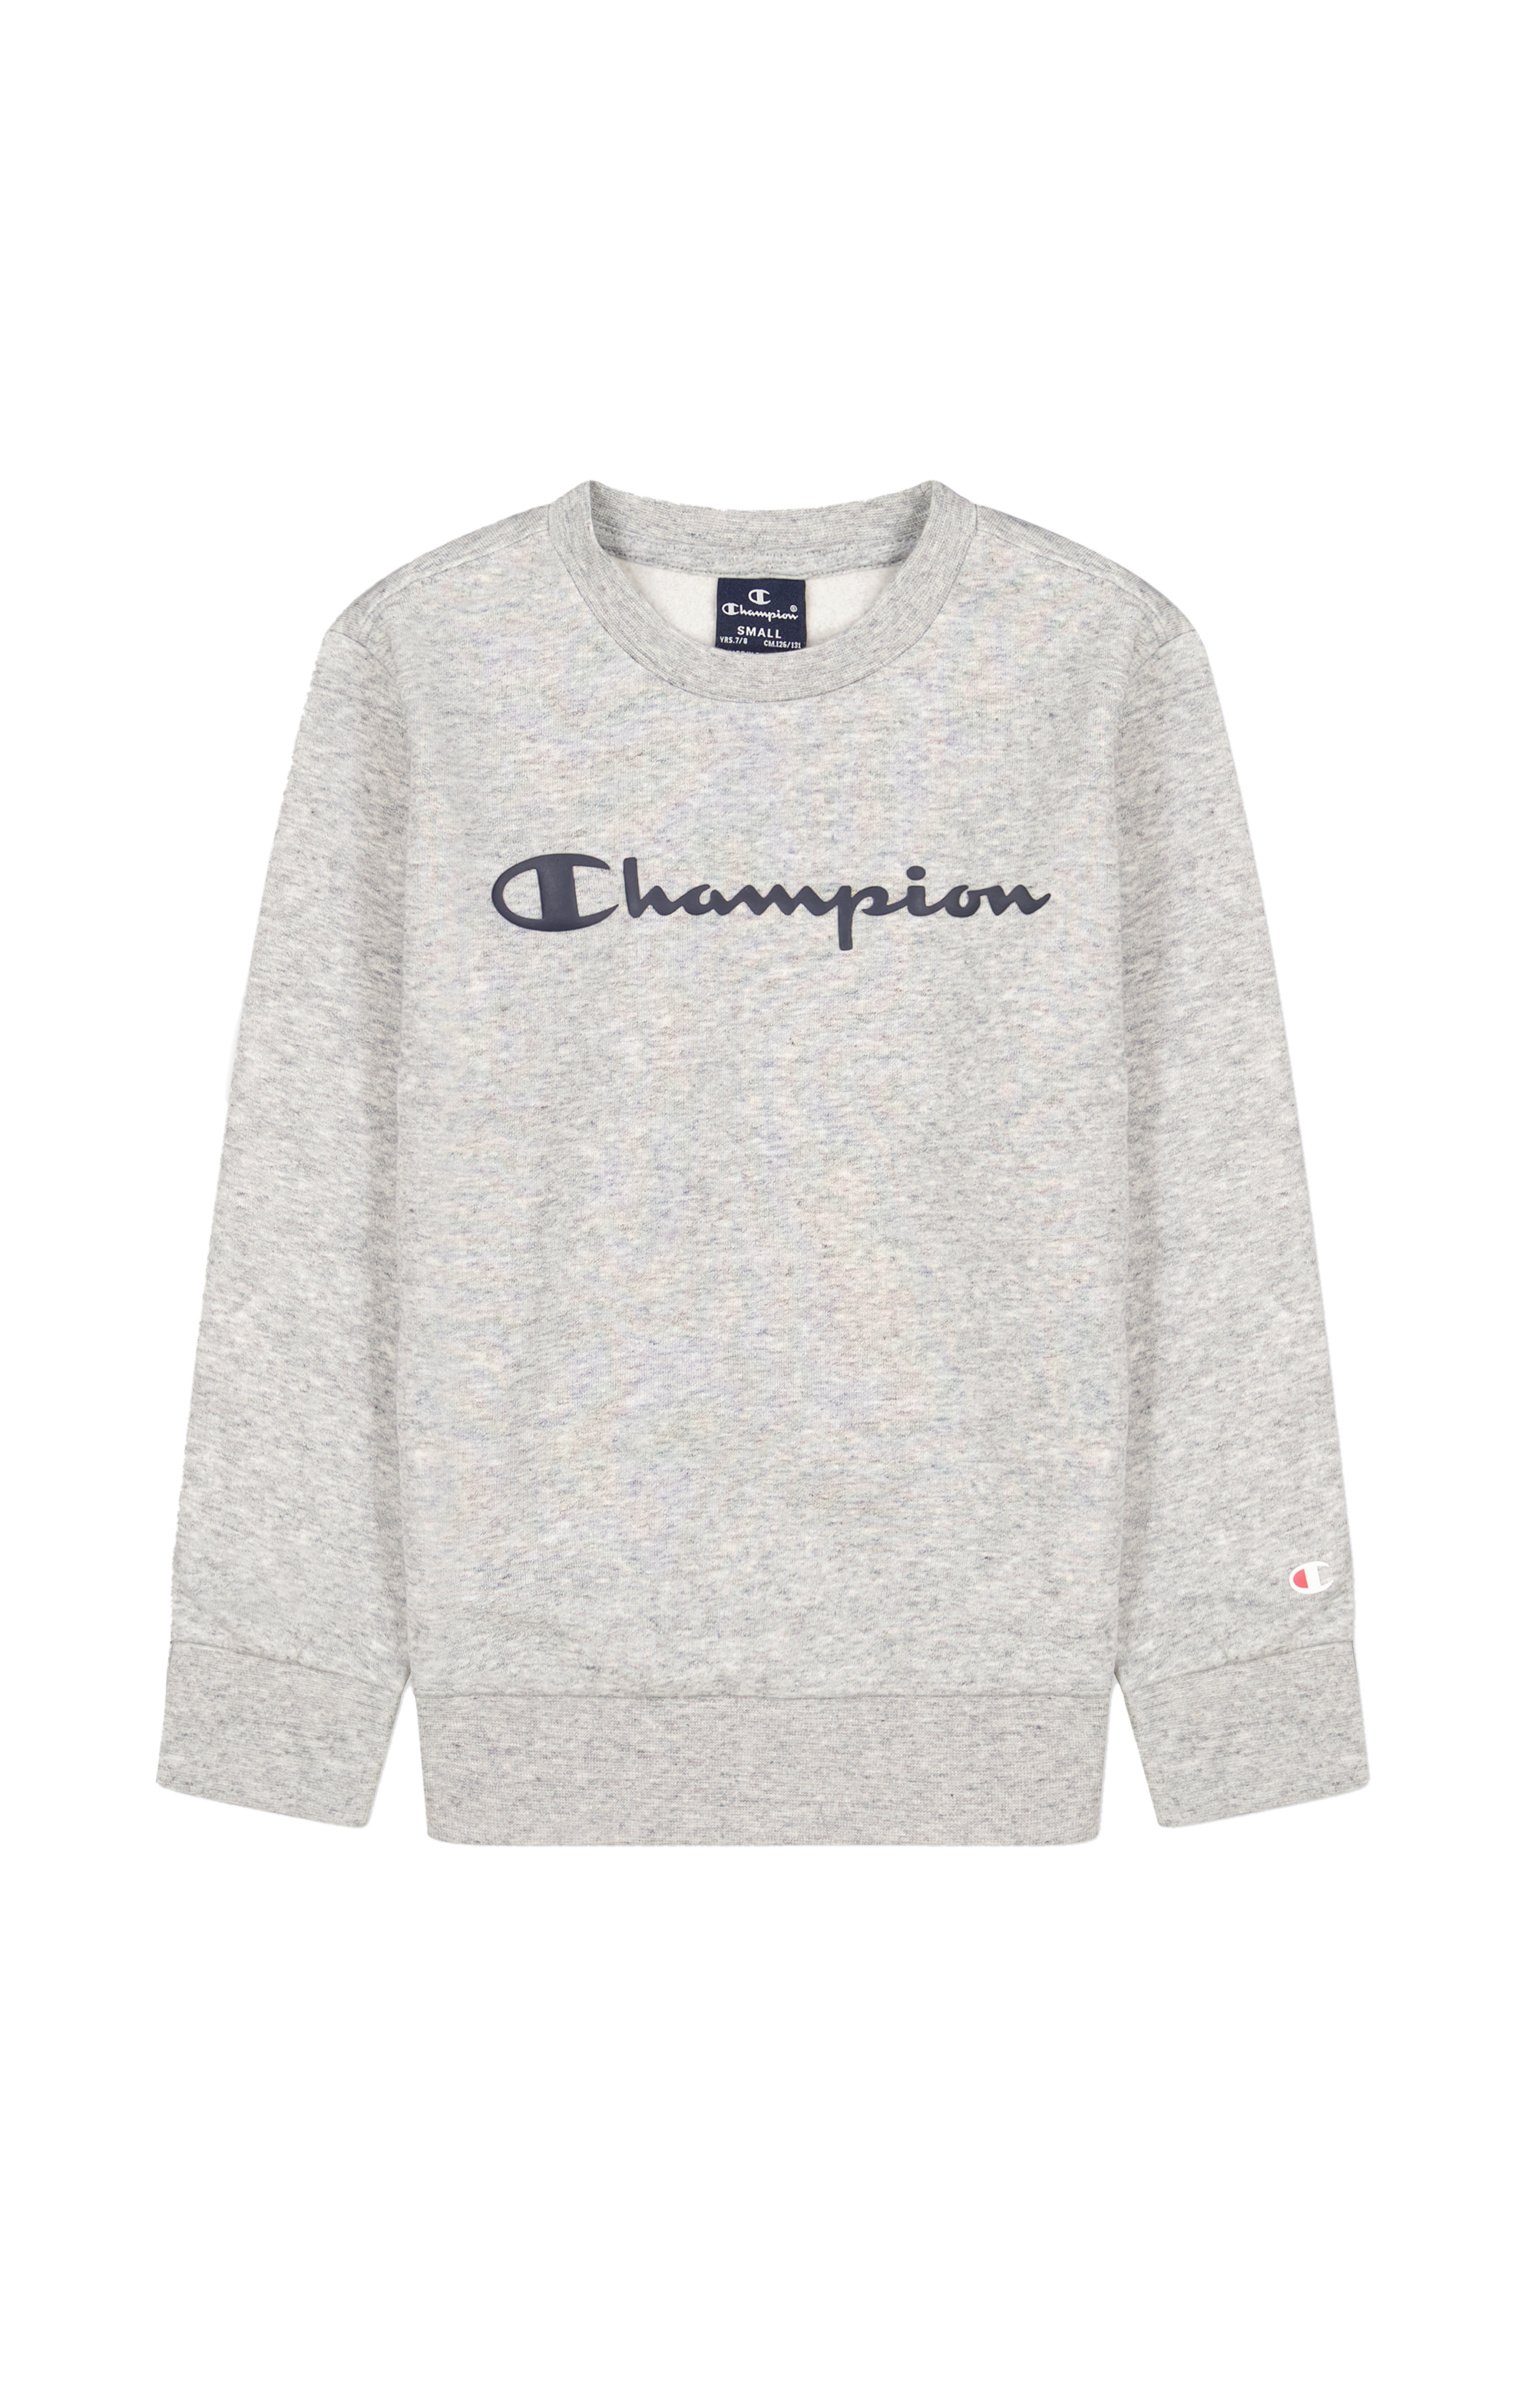 (grau) Champion Champion 305360 Kinder Crewneck Sweatshirt Sweatshirt noxm